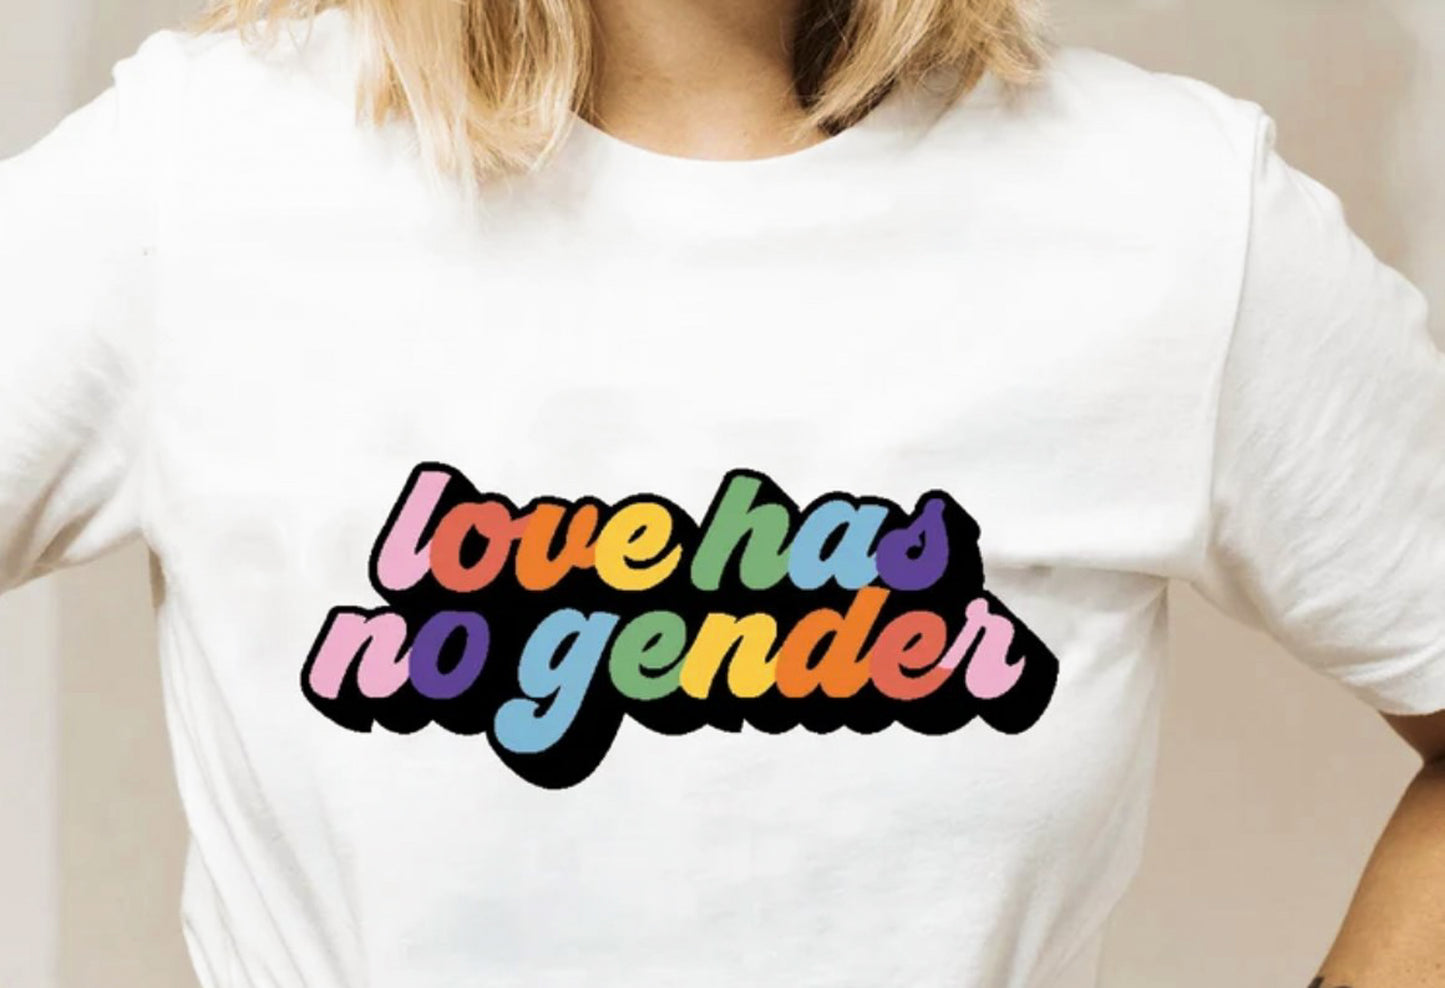 Love Has No Gender Tee